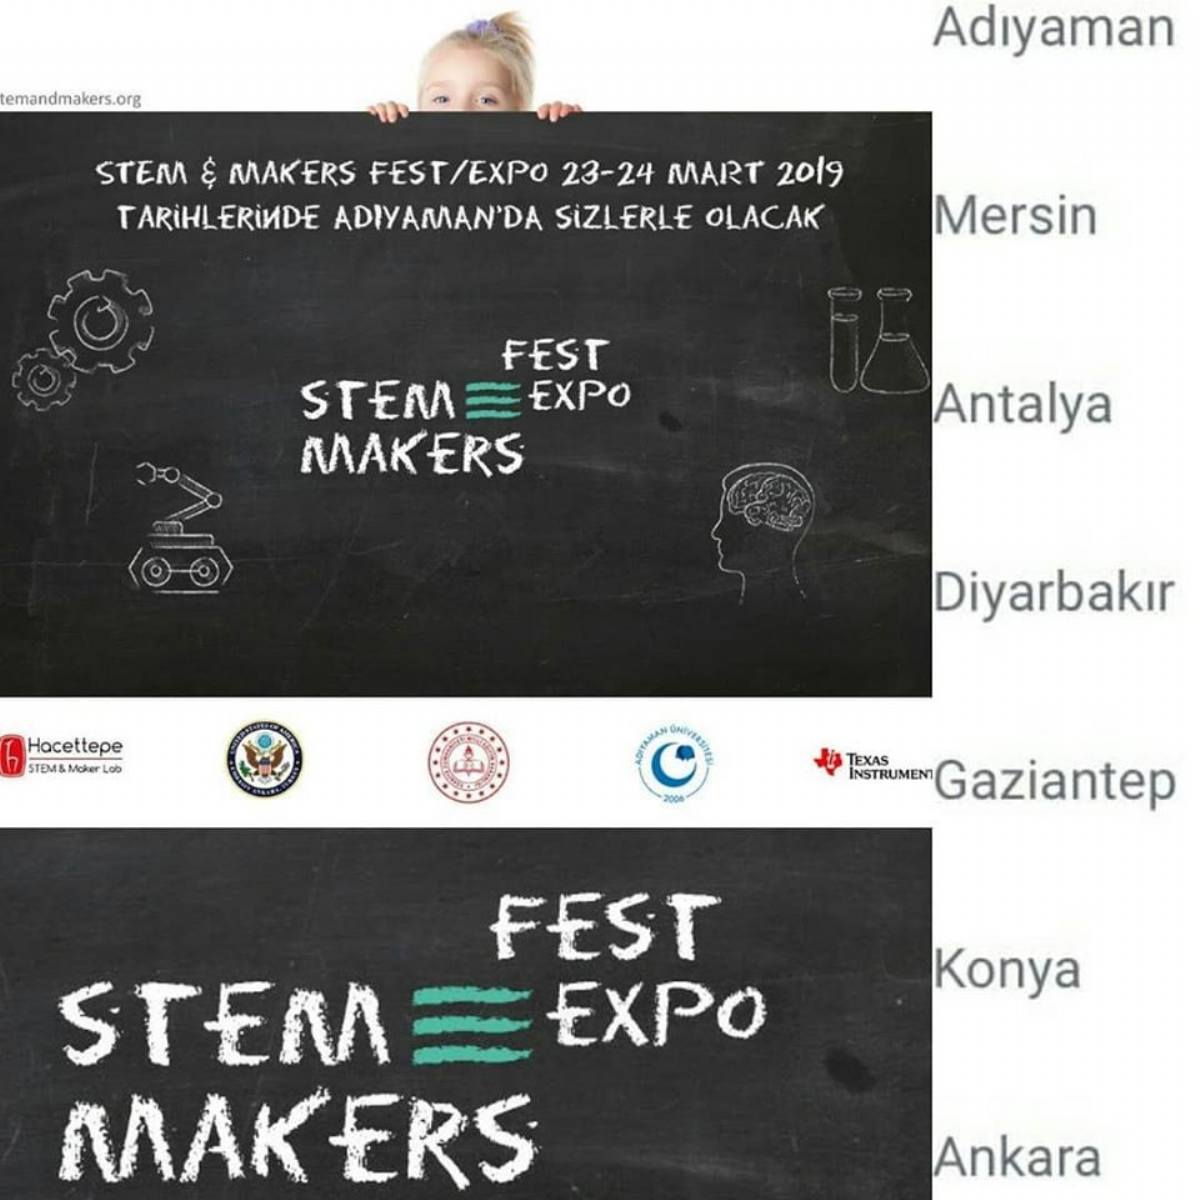 STEM&Makers Fest Expo